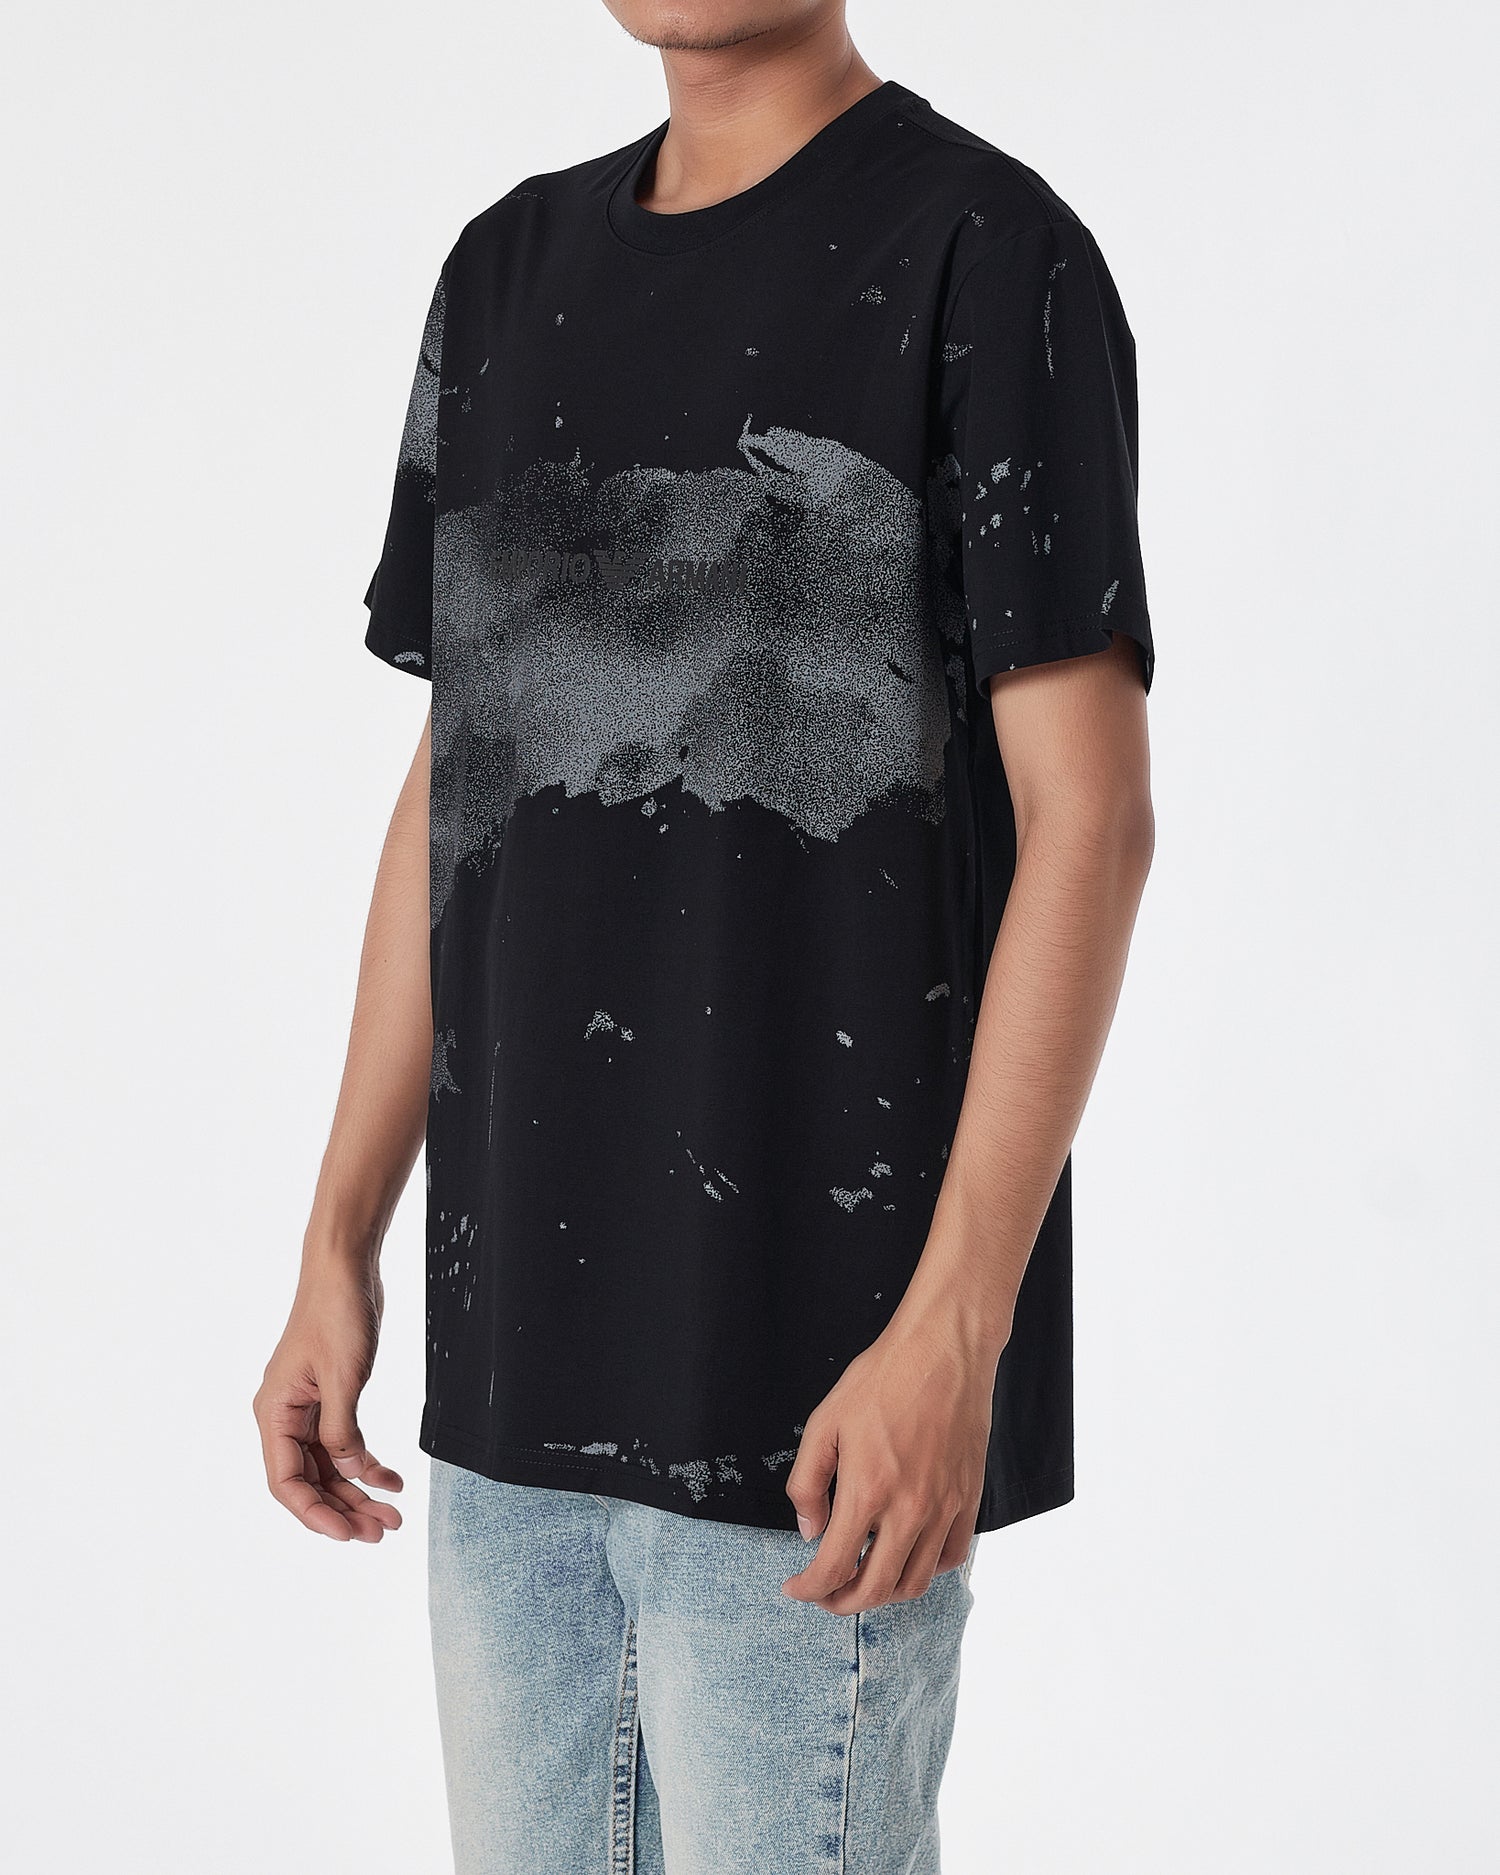 ARM Ink Splatter Printed Men Black T-Shirt 15.90